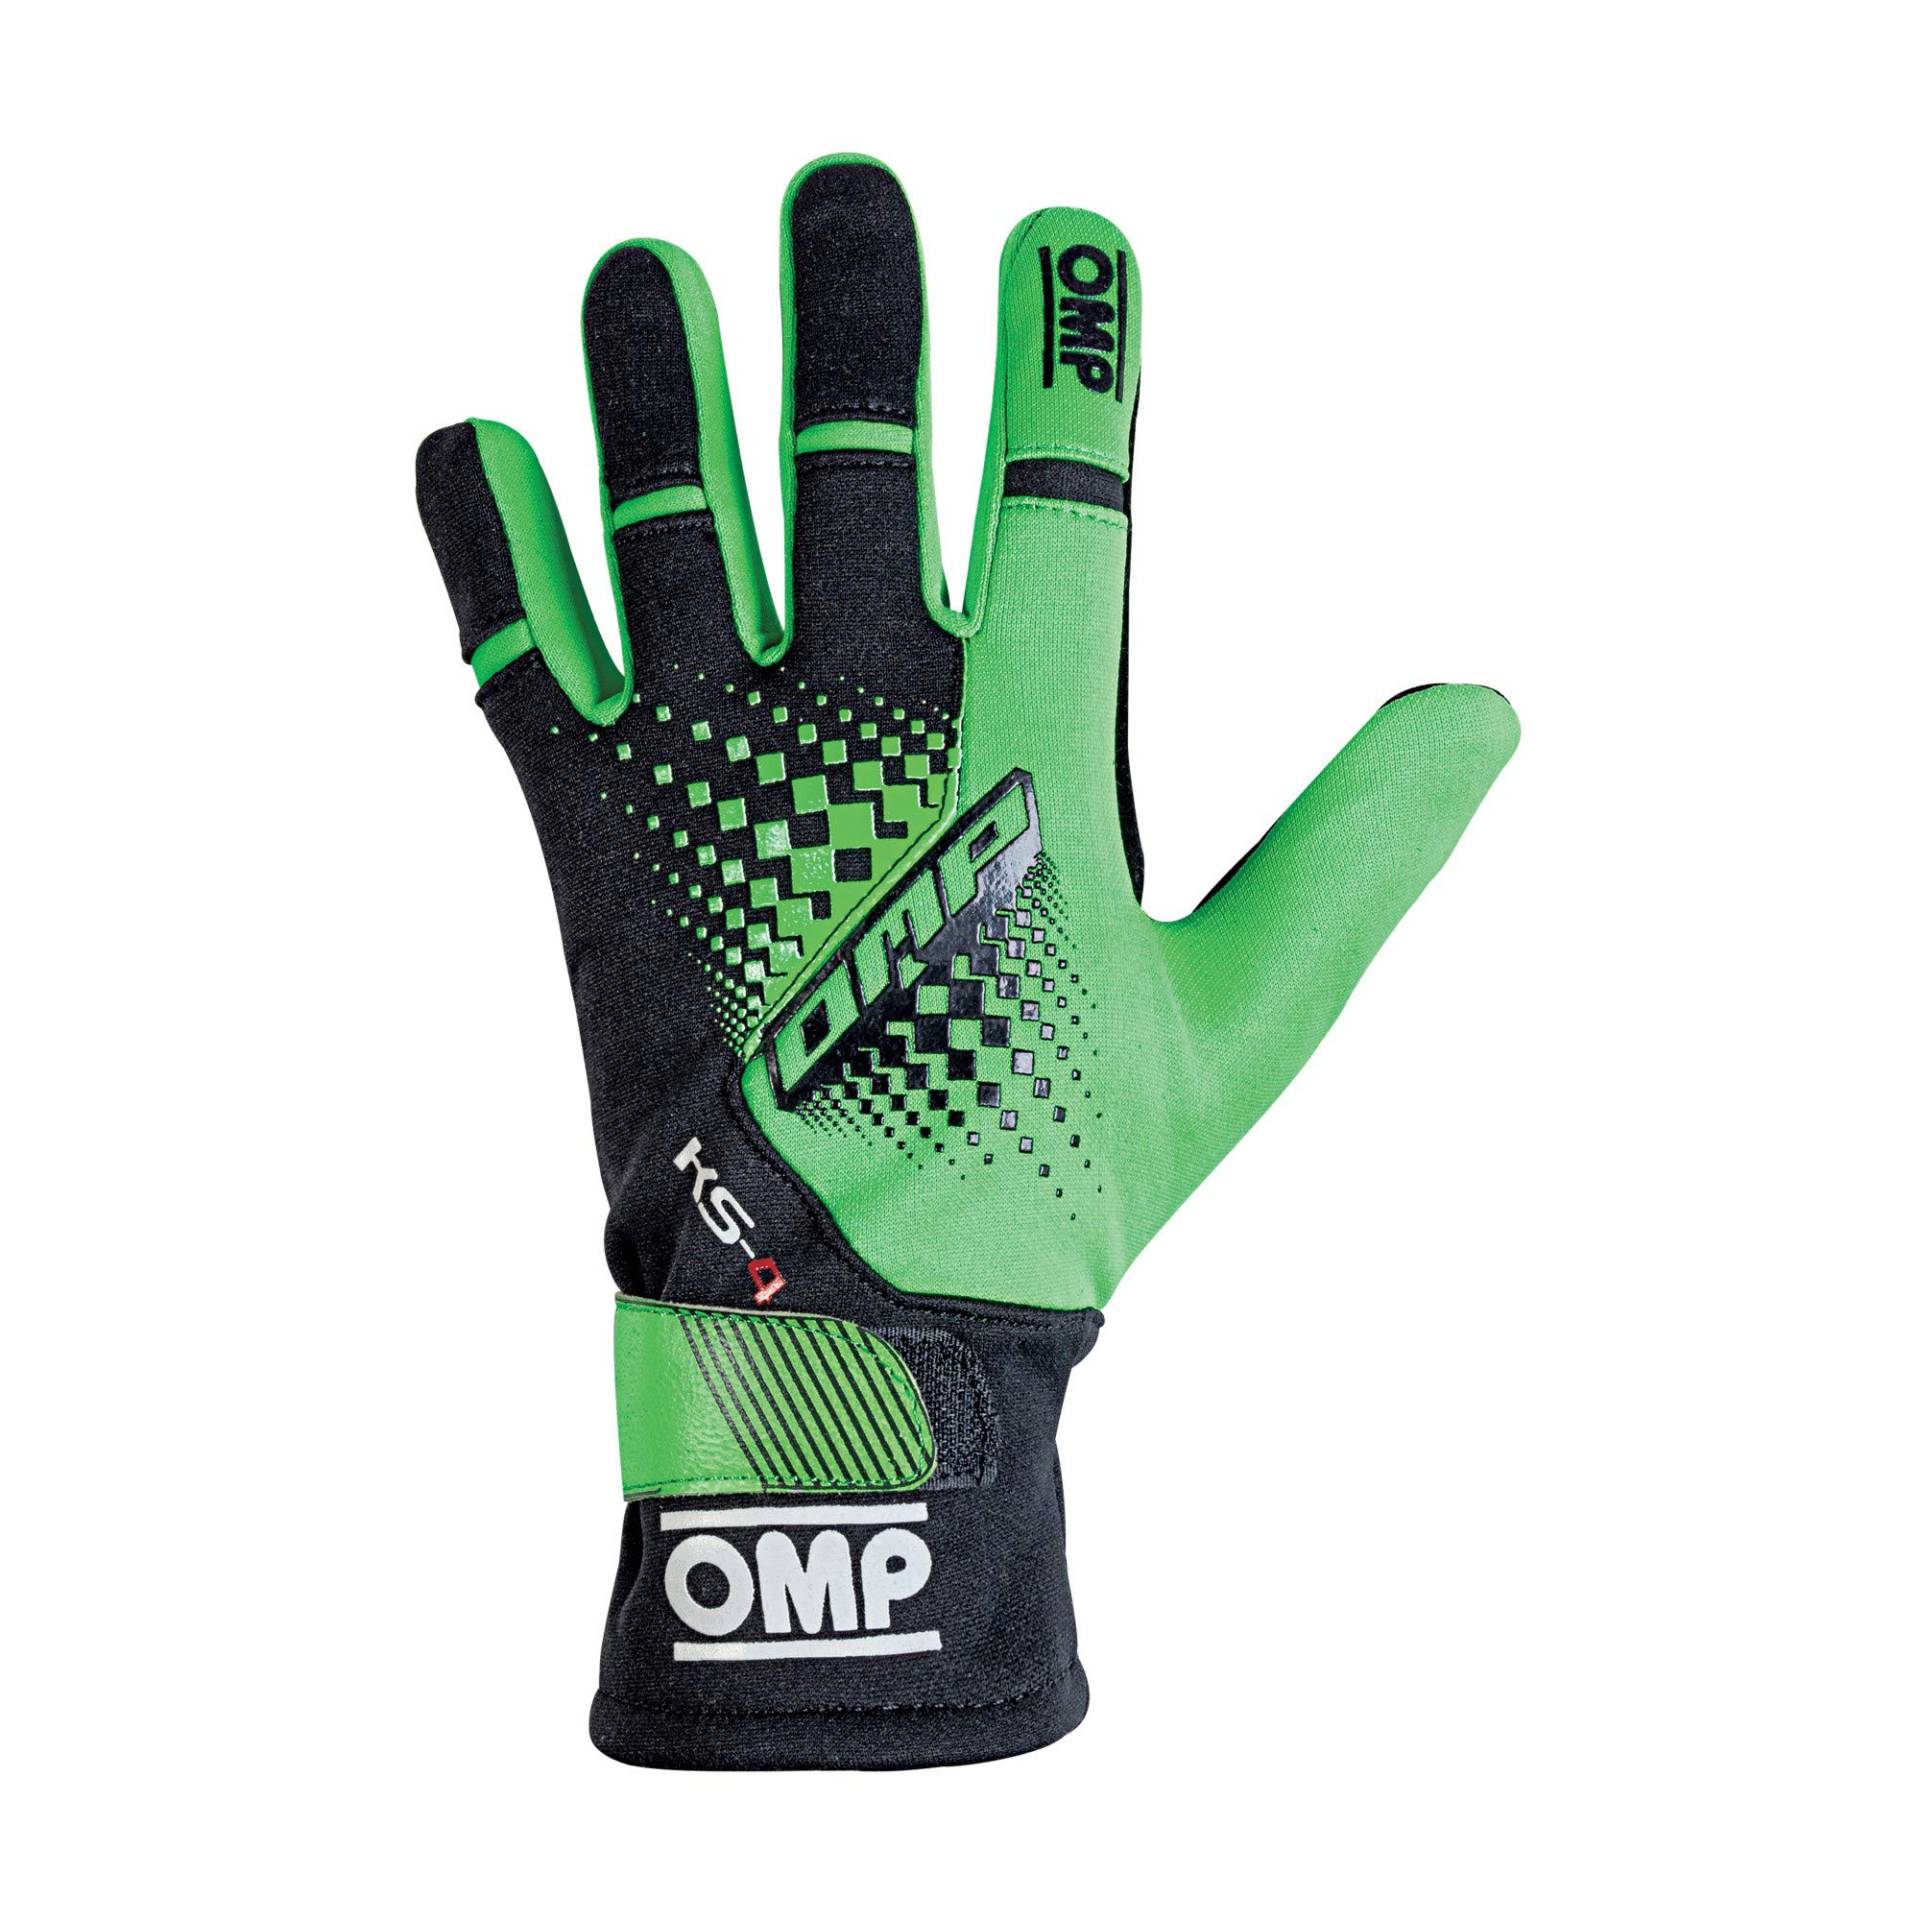 OMP OMPKK02744E231005 Ks-4 Handschuhe My2018 Grün/Schwarz Size 5 schwarz / grün von OMP